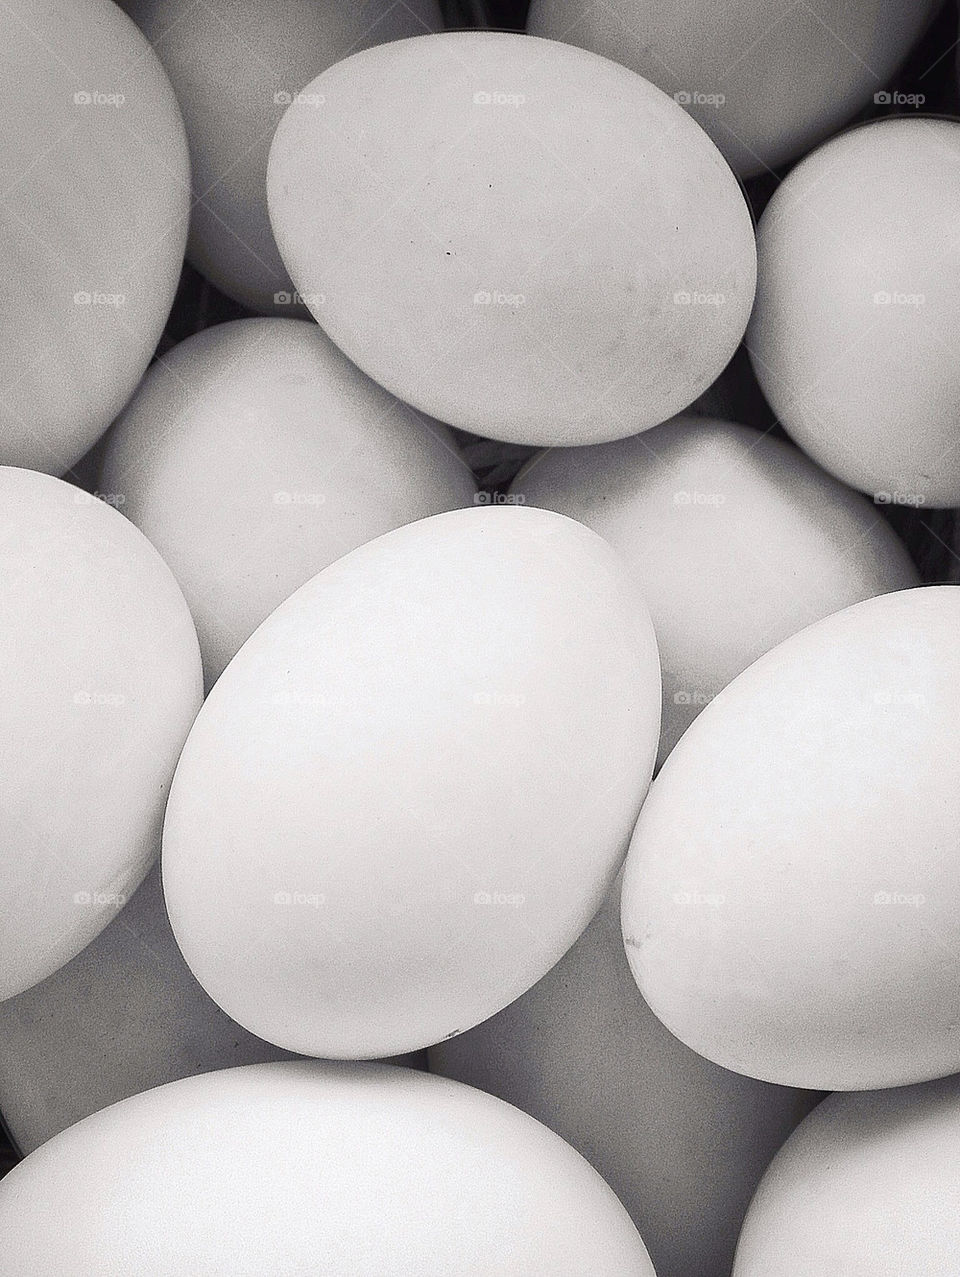 blackandwhite eggs bw farm by jonpunshon90